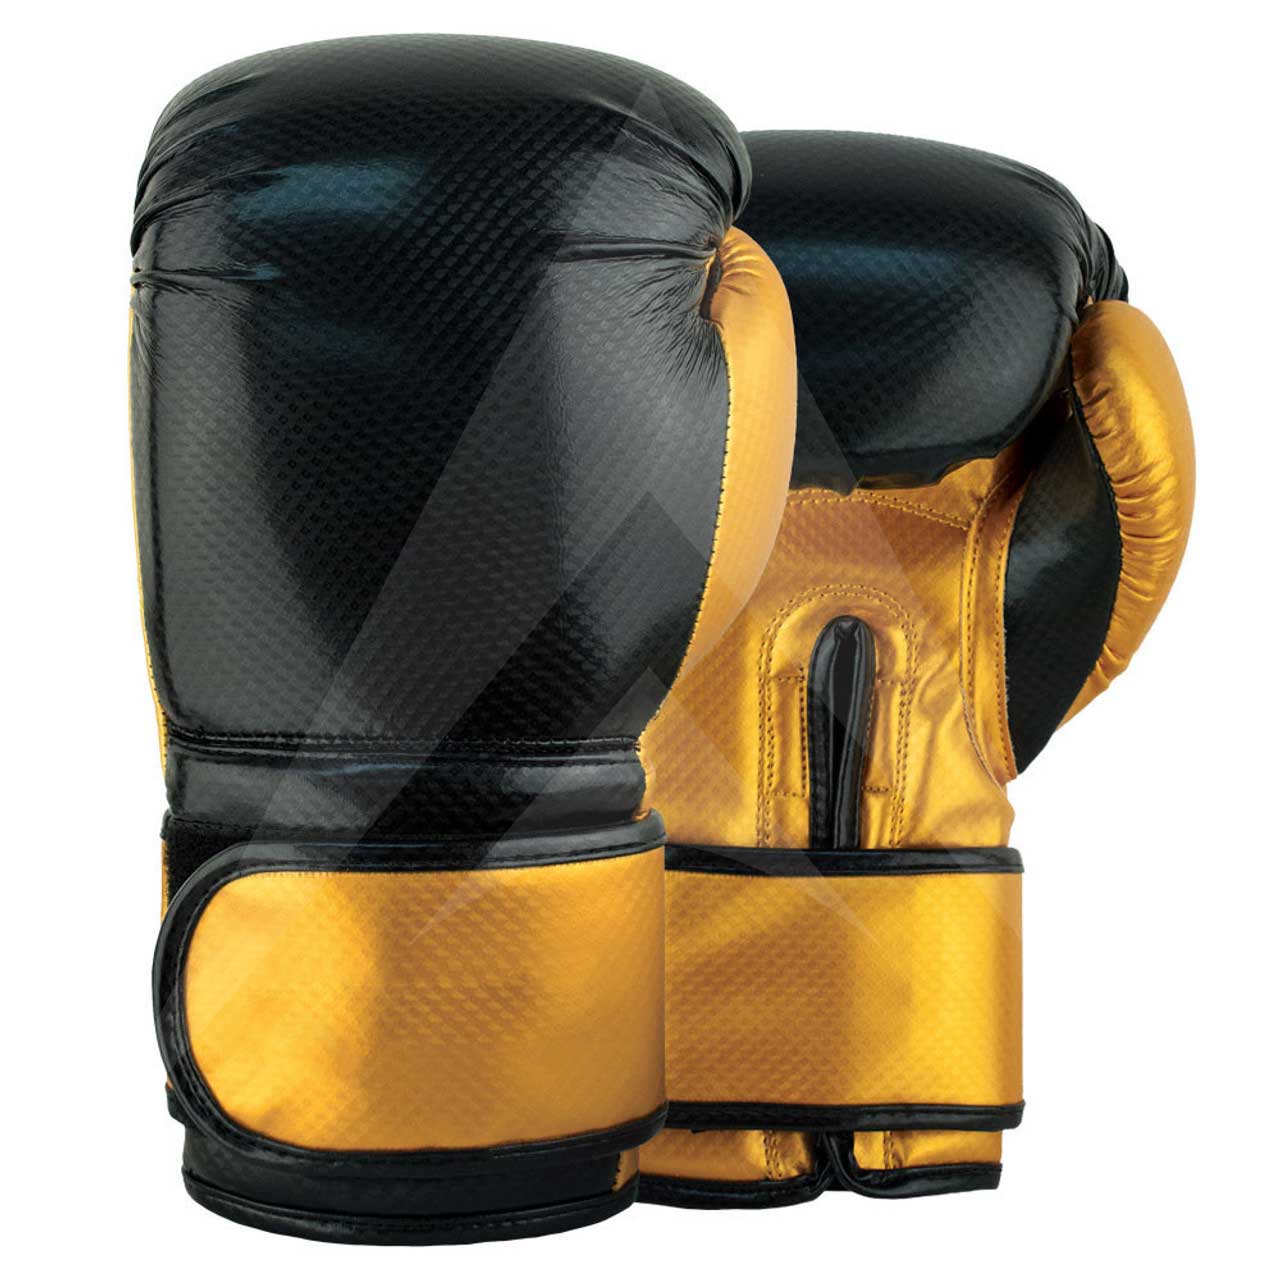 boxing gloves black gold